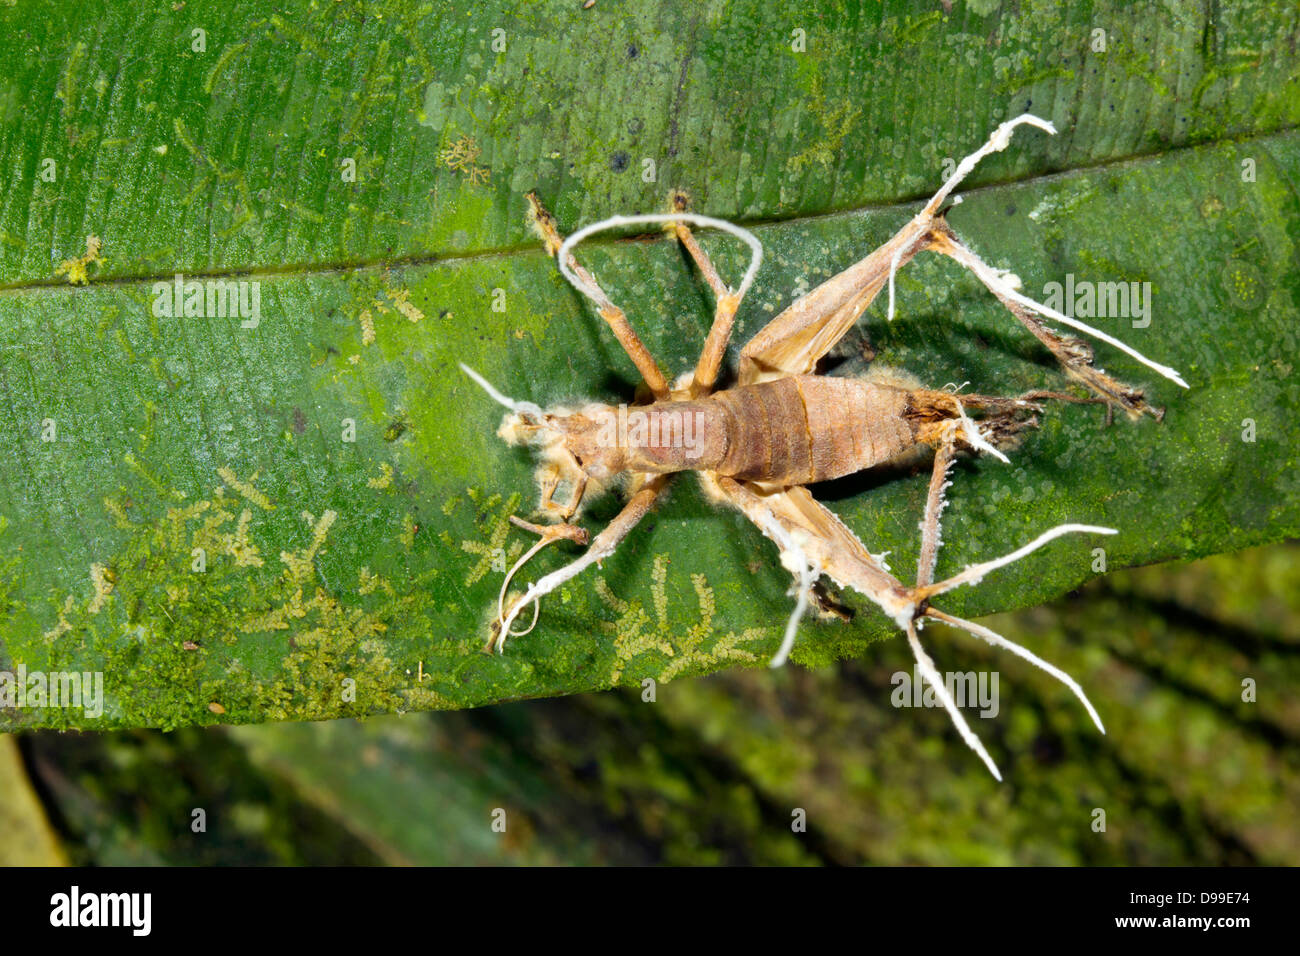 Cricket parasitised and killed by Cordyceps fungus in the Ecuadorian Amazon Stock Photo